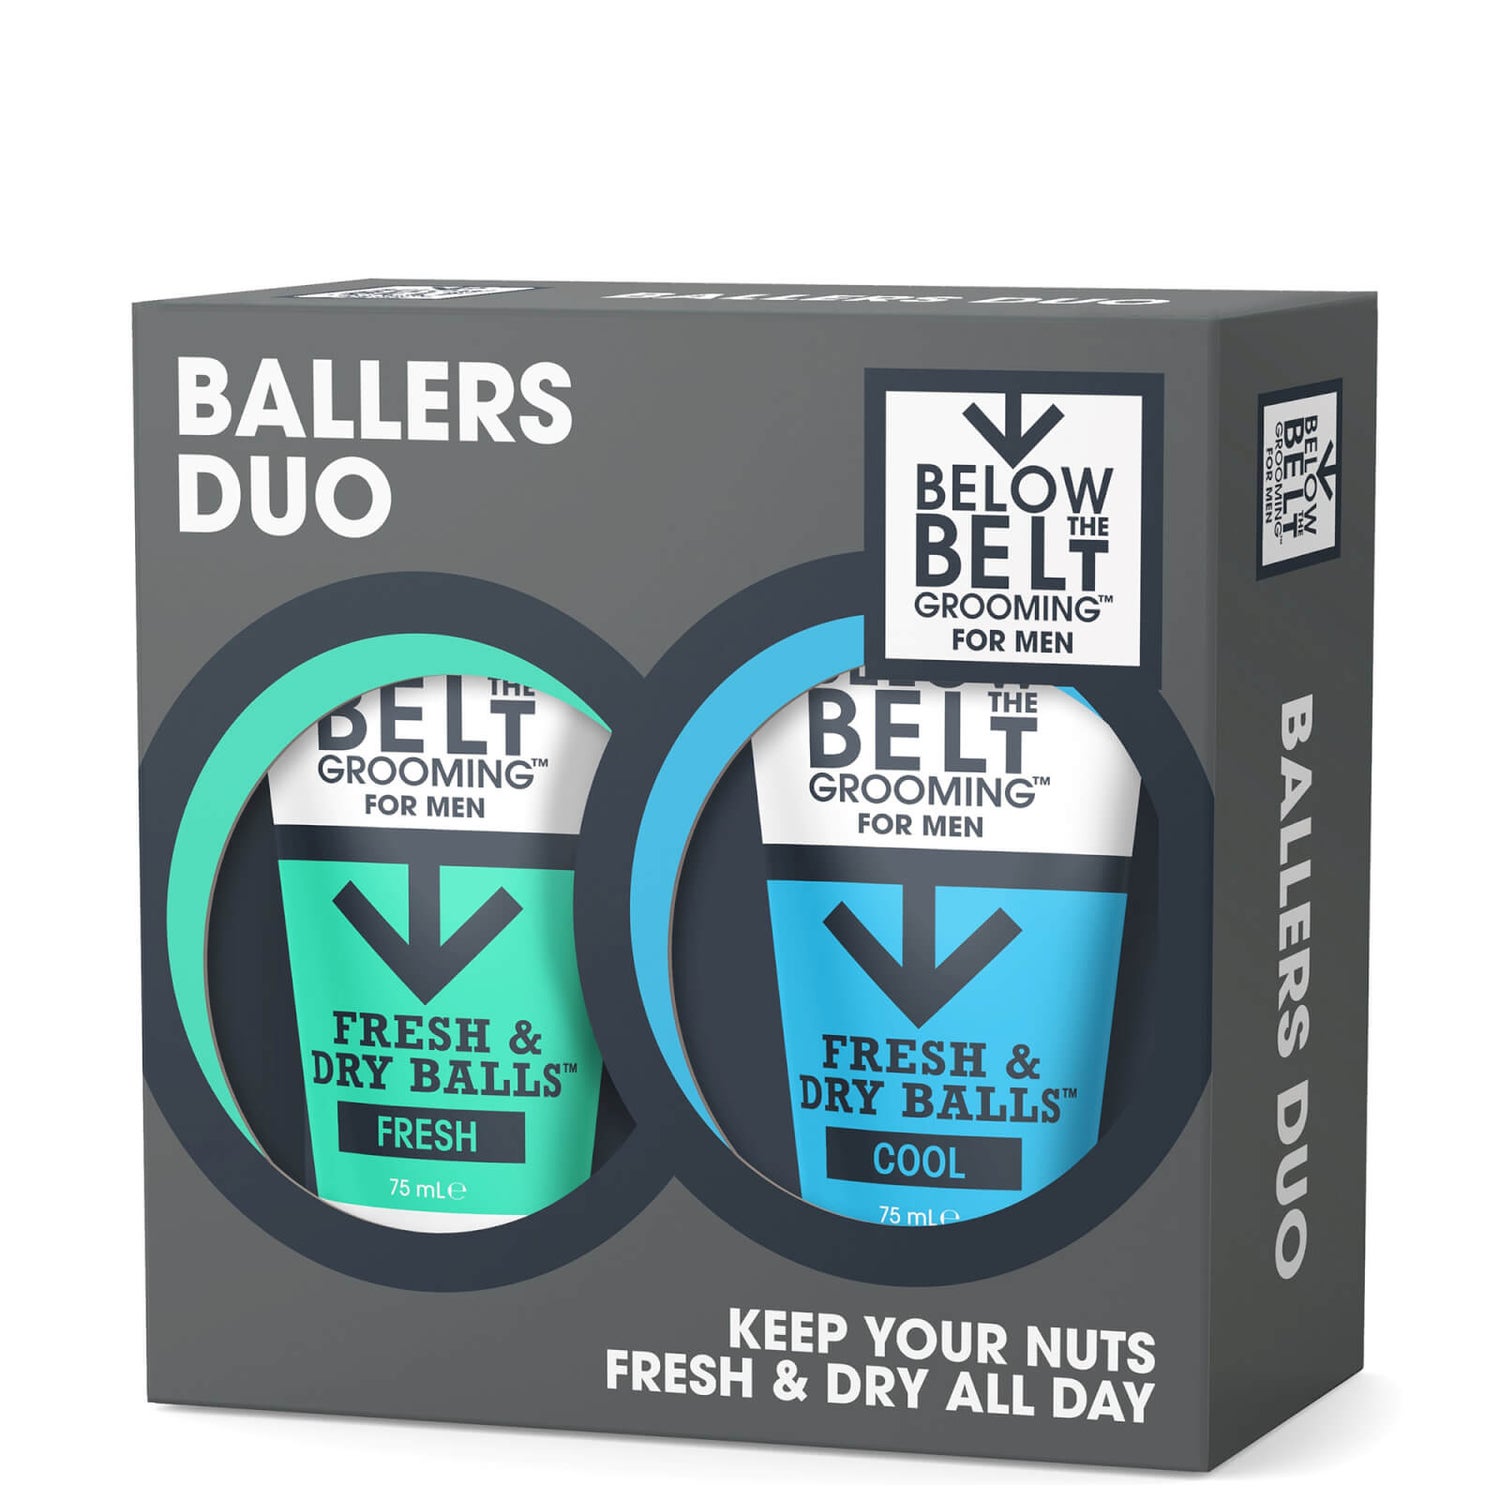 Below The Belt Grooming Ballers Duo